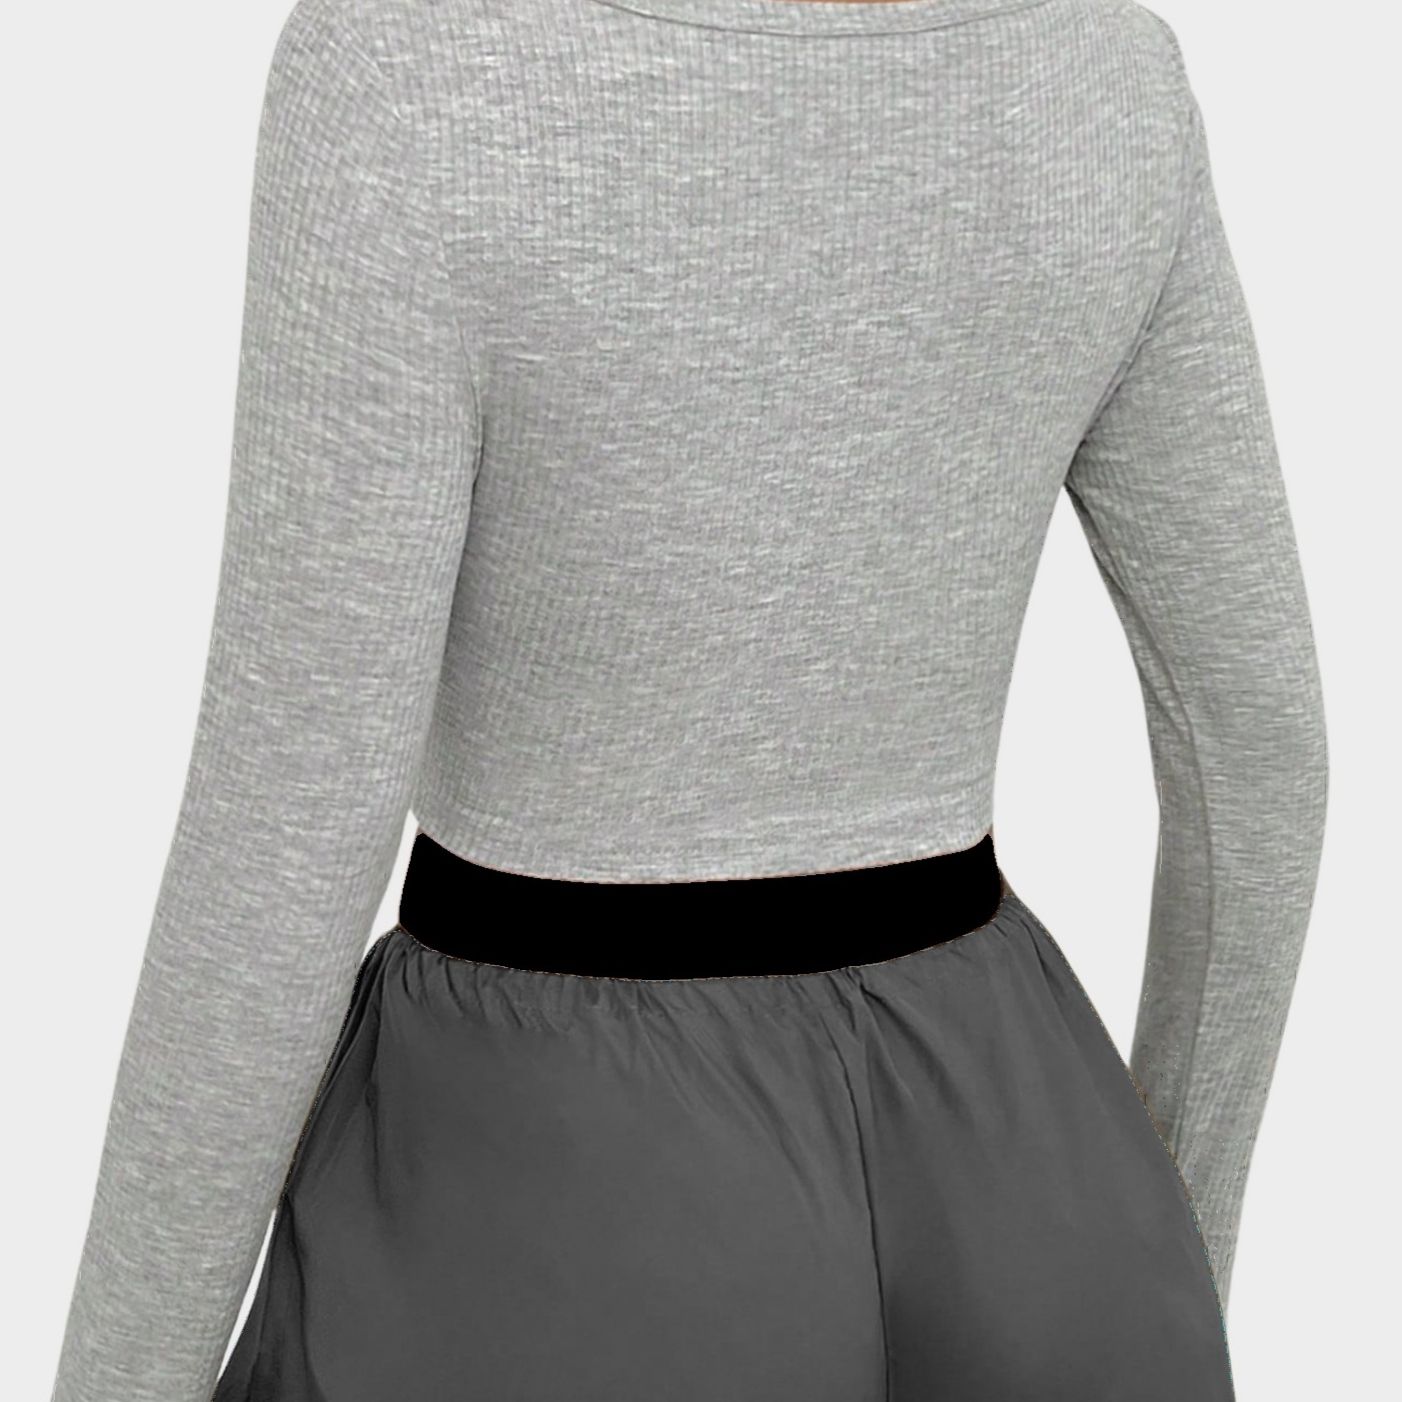 کراپ‌تی شرت آستین بلند زنانه آرمادیا مدل ملانژ کبریتی -  - 3